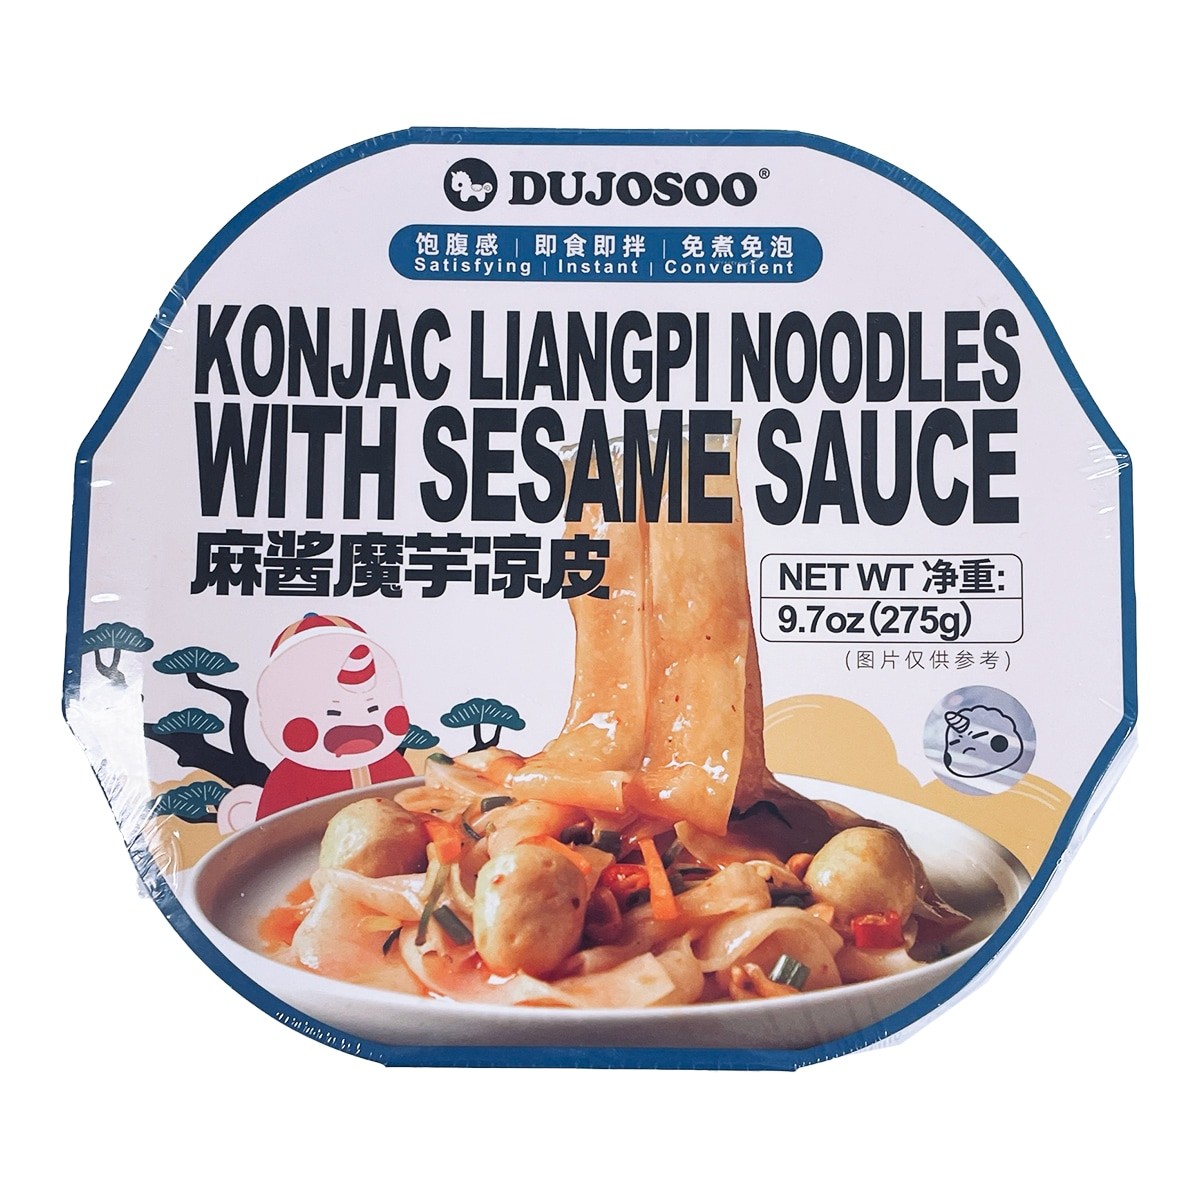 konjac-liangpi-noodles-with-sesame-sauce